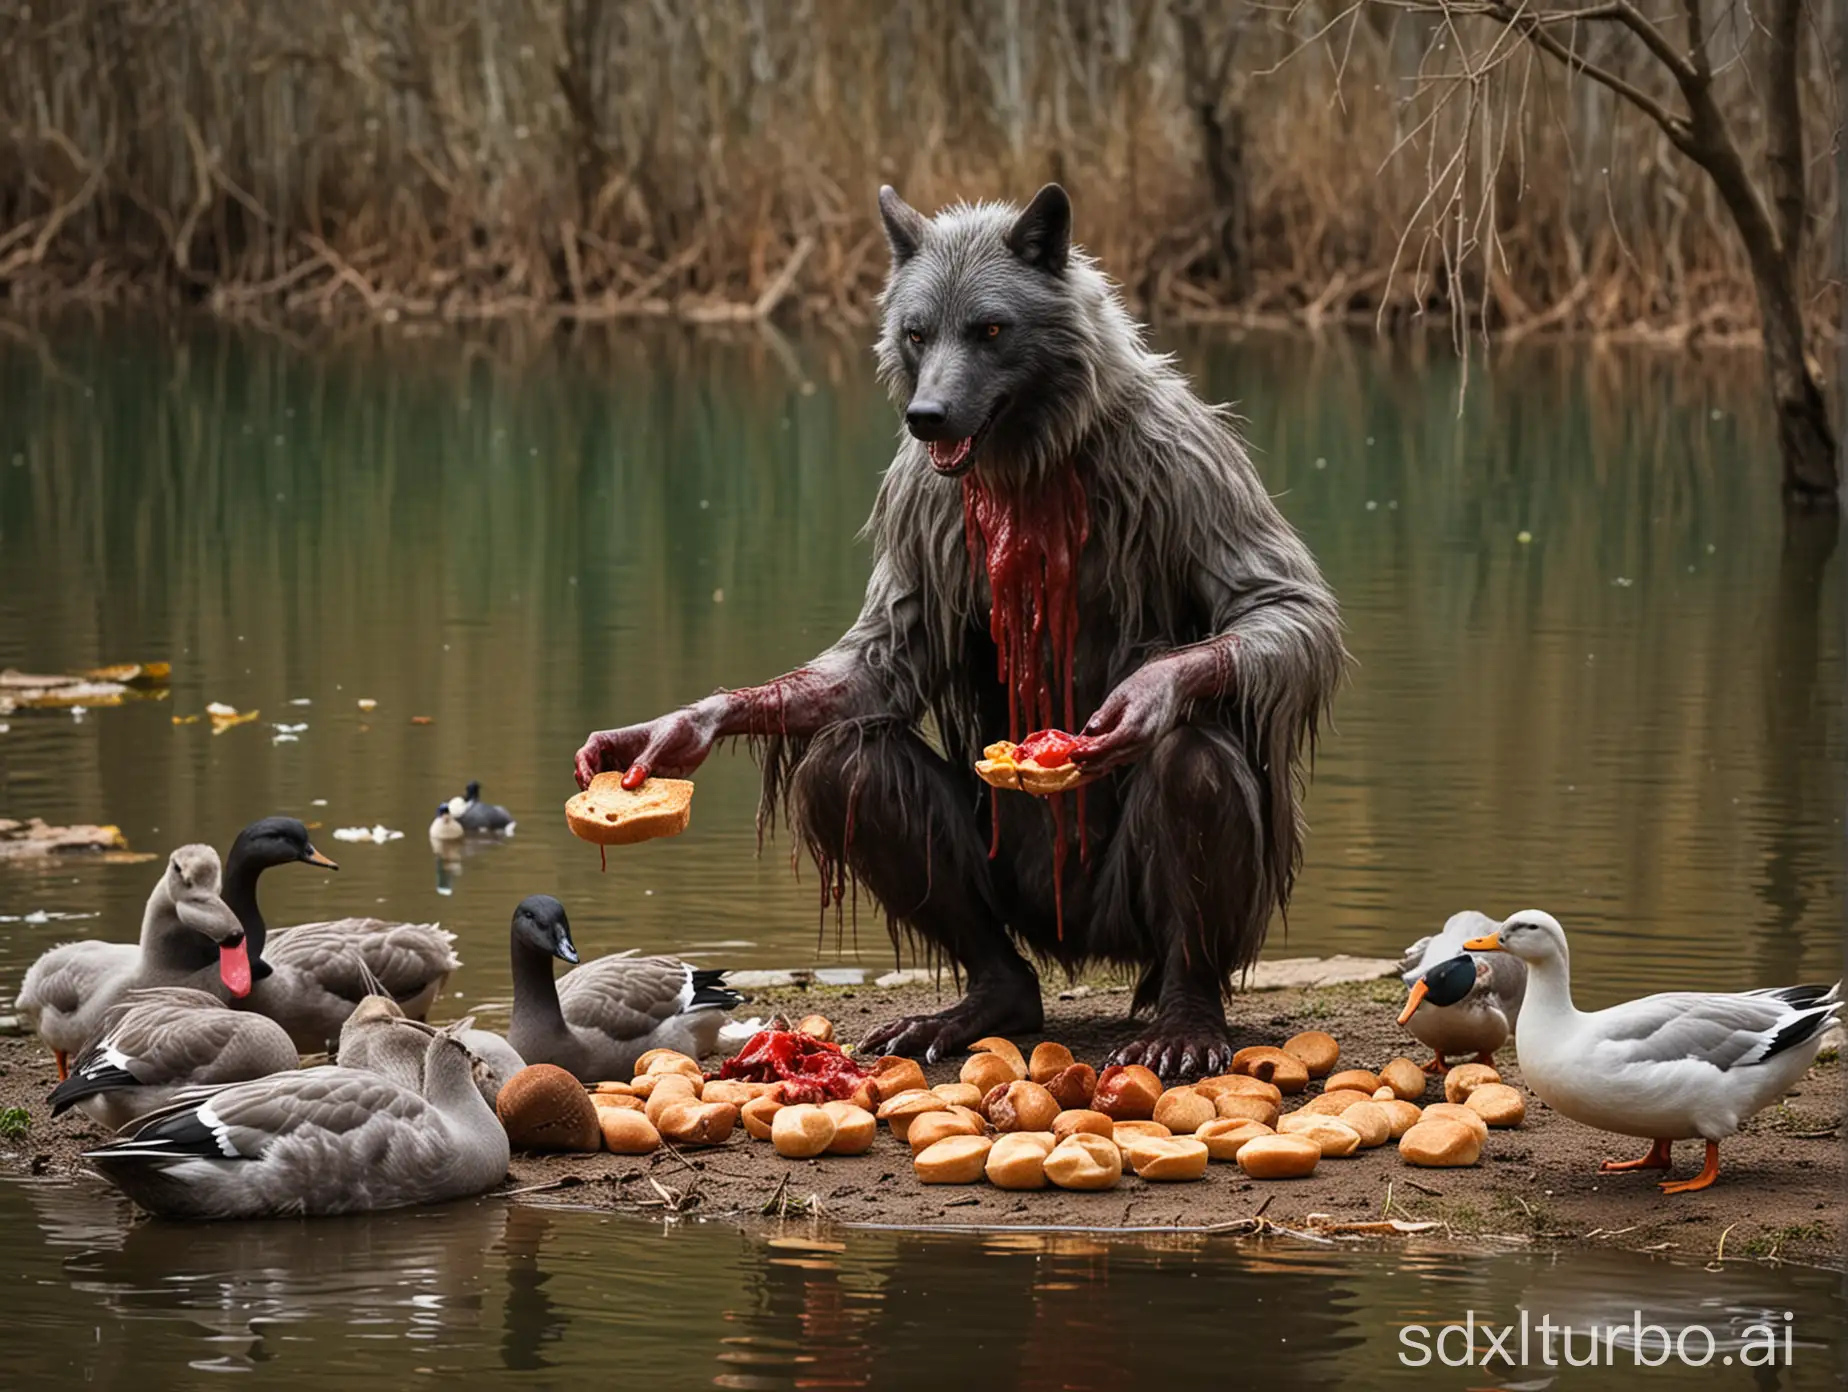 blood lusty werewolf is feeding the ducks with bread